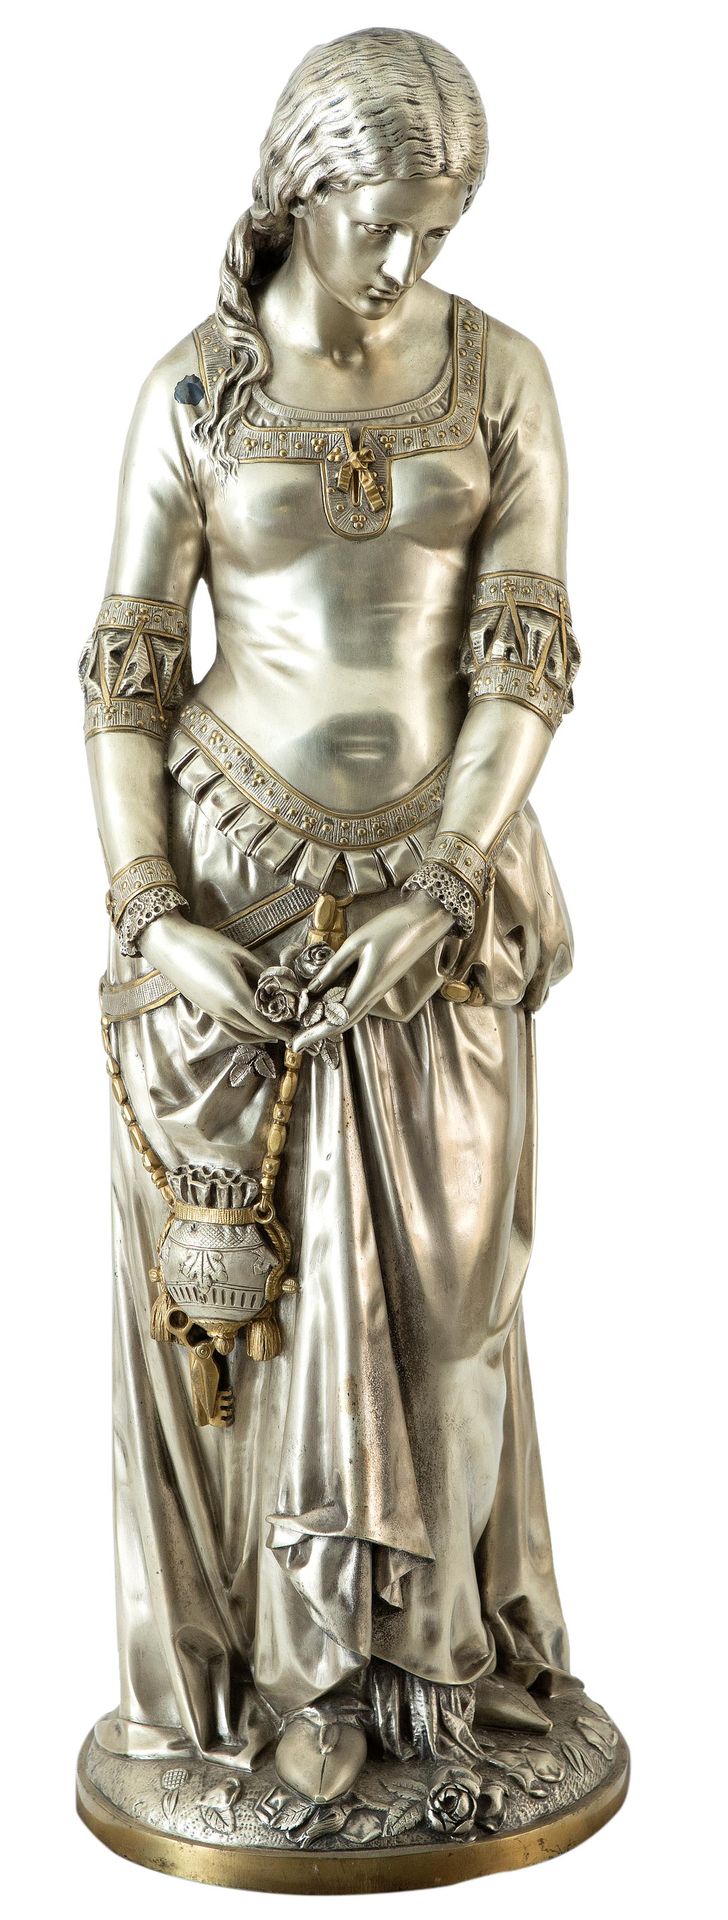 Albert Ernest CARRIER-BELLEUSE (1824-1887) (归属)

玛格丽特》，1872年

镀银的青铜，有镀金的细节。带有187&hellip;